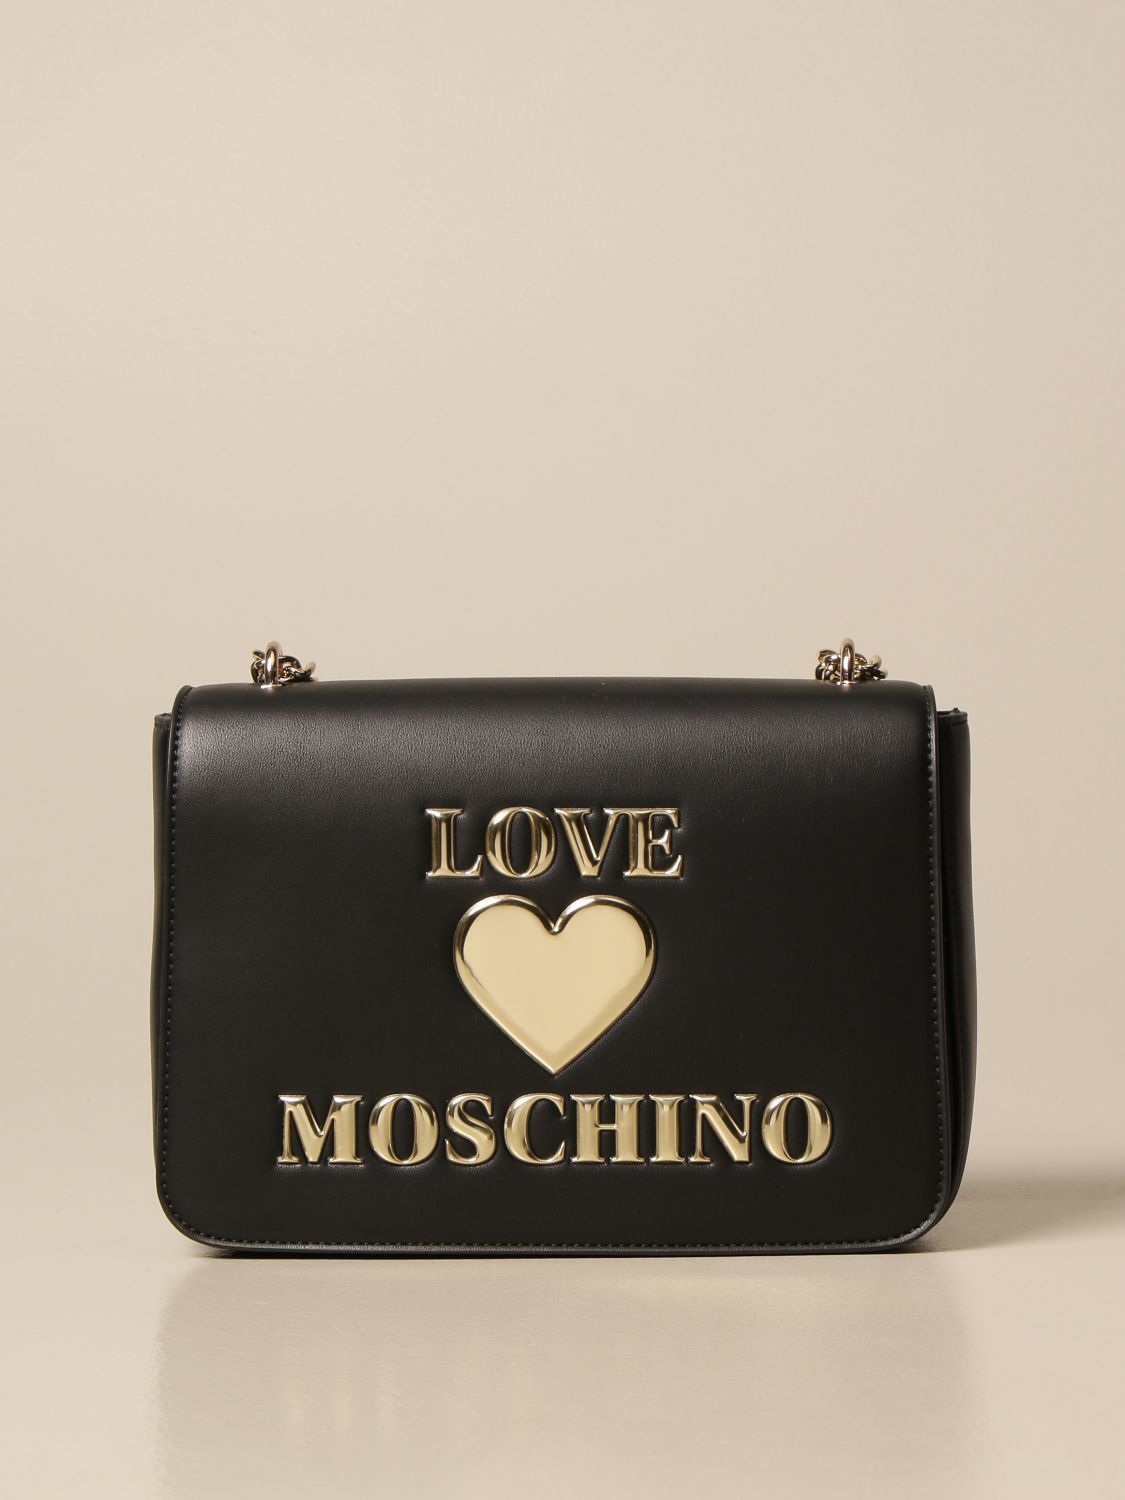 love moschino purse black